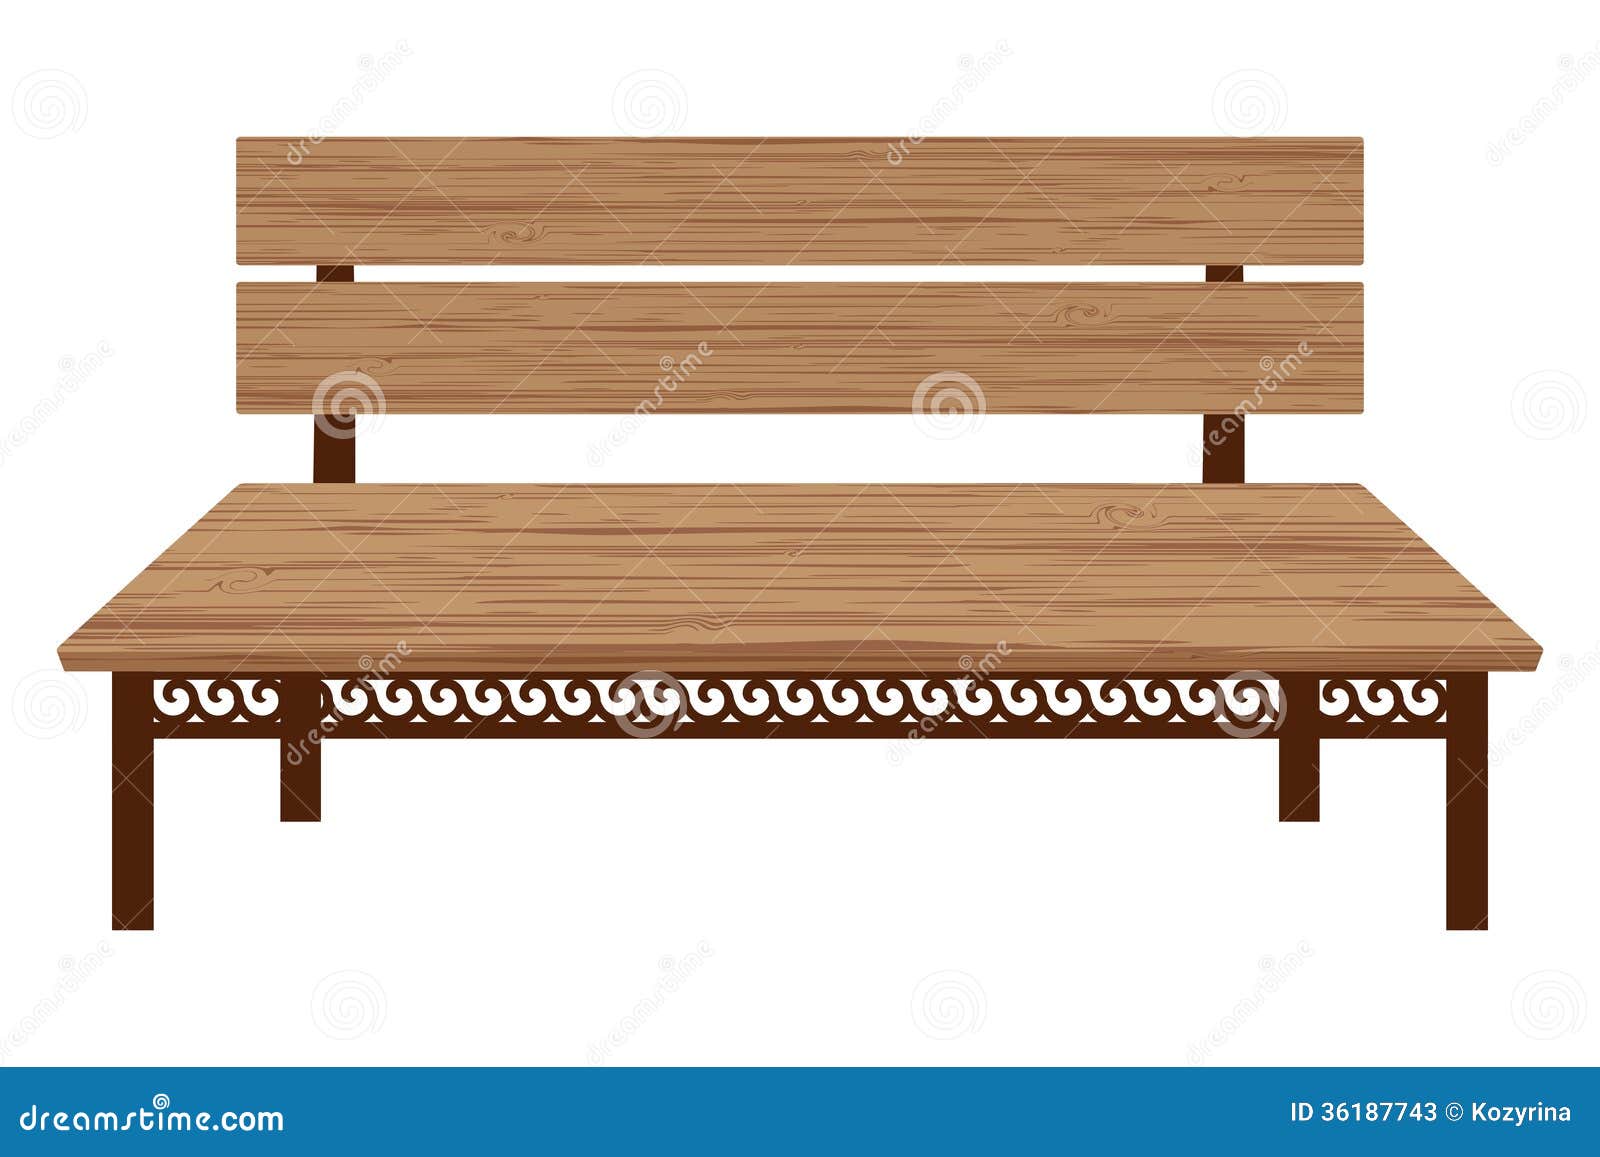 Wooden Bench Stock Photos - Image: 36187743